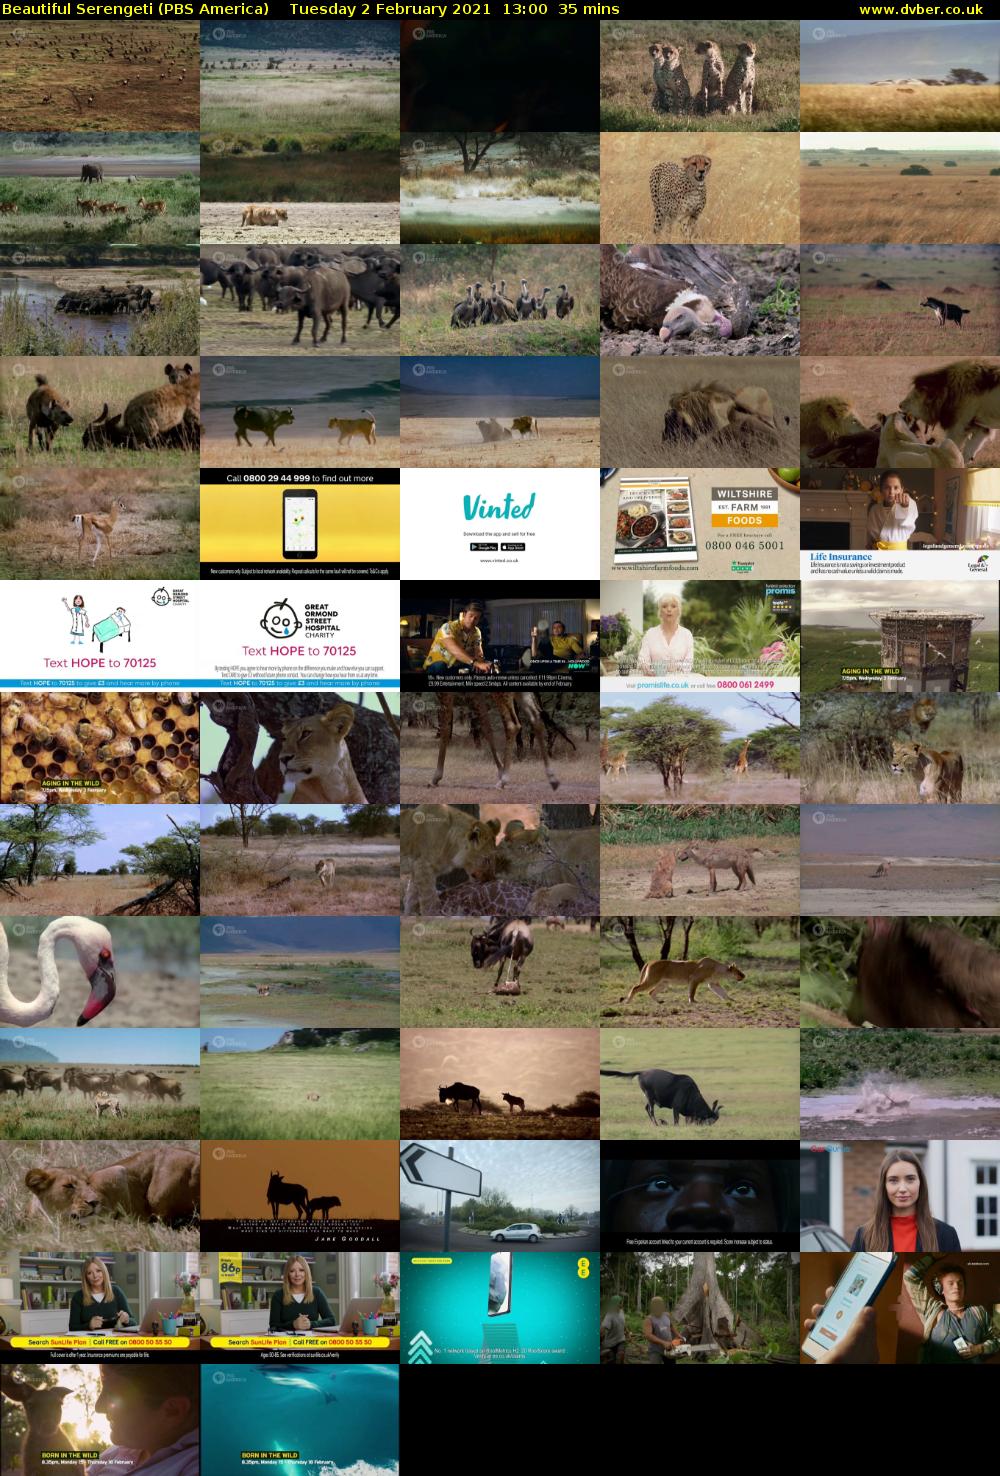 Beautiful Serengeti (PBS America) Tuesday 2 February 2021 13:00 - 13:35